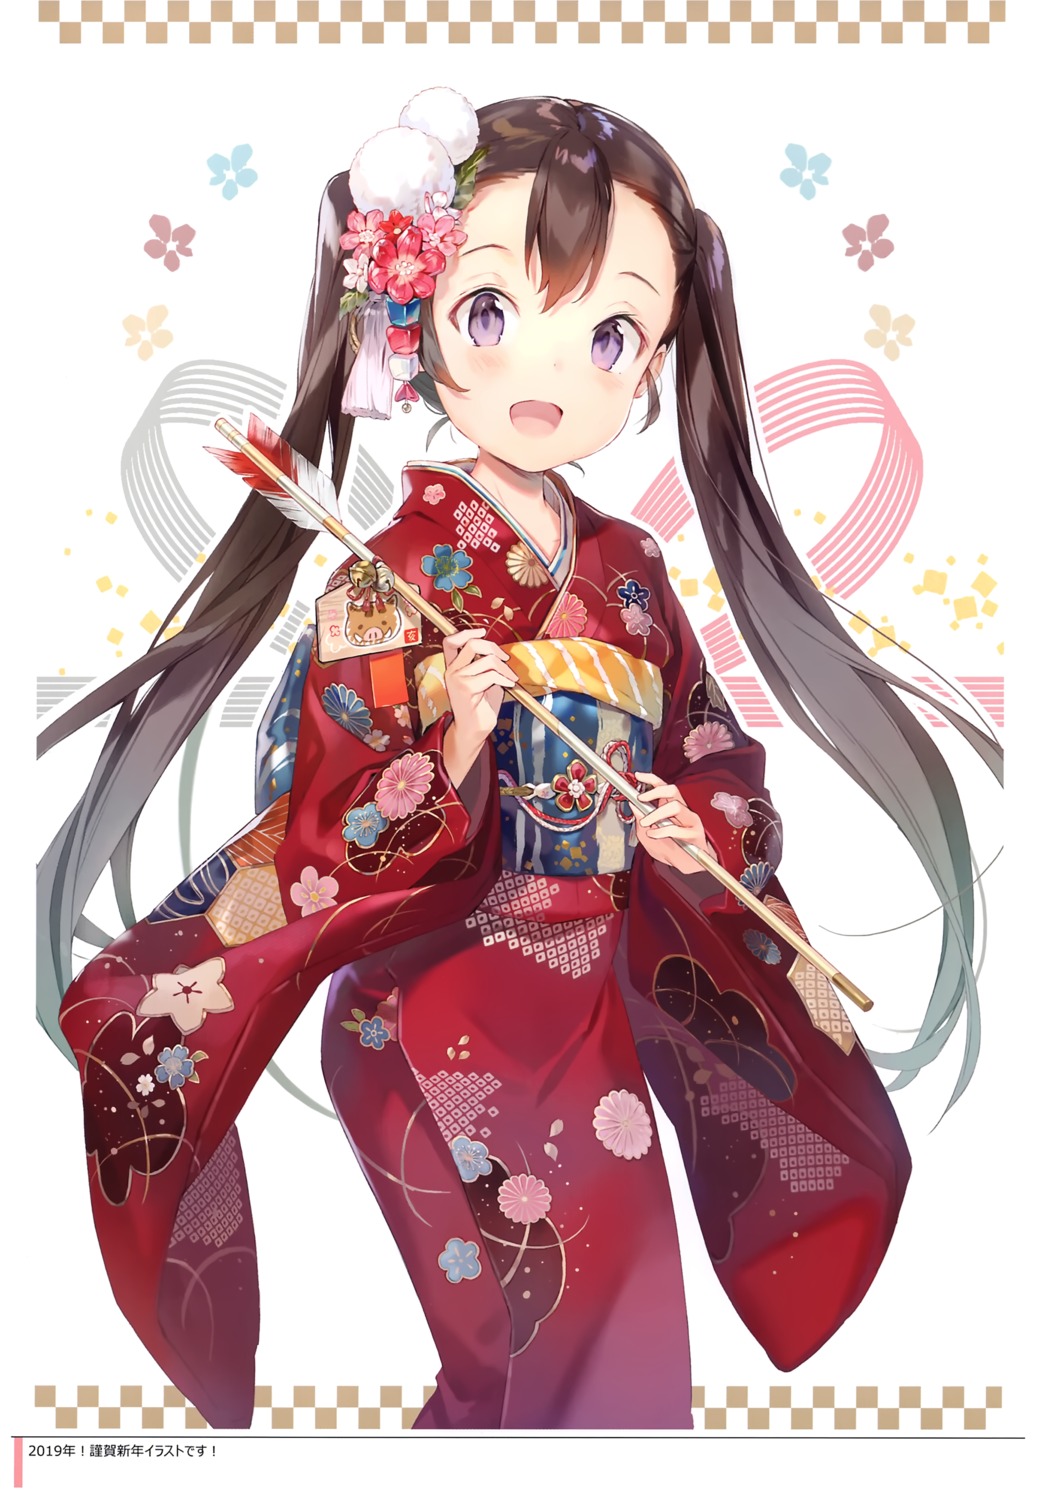 gilse kimono